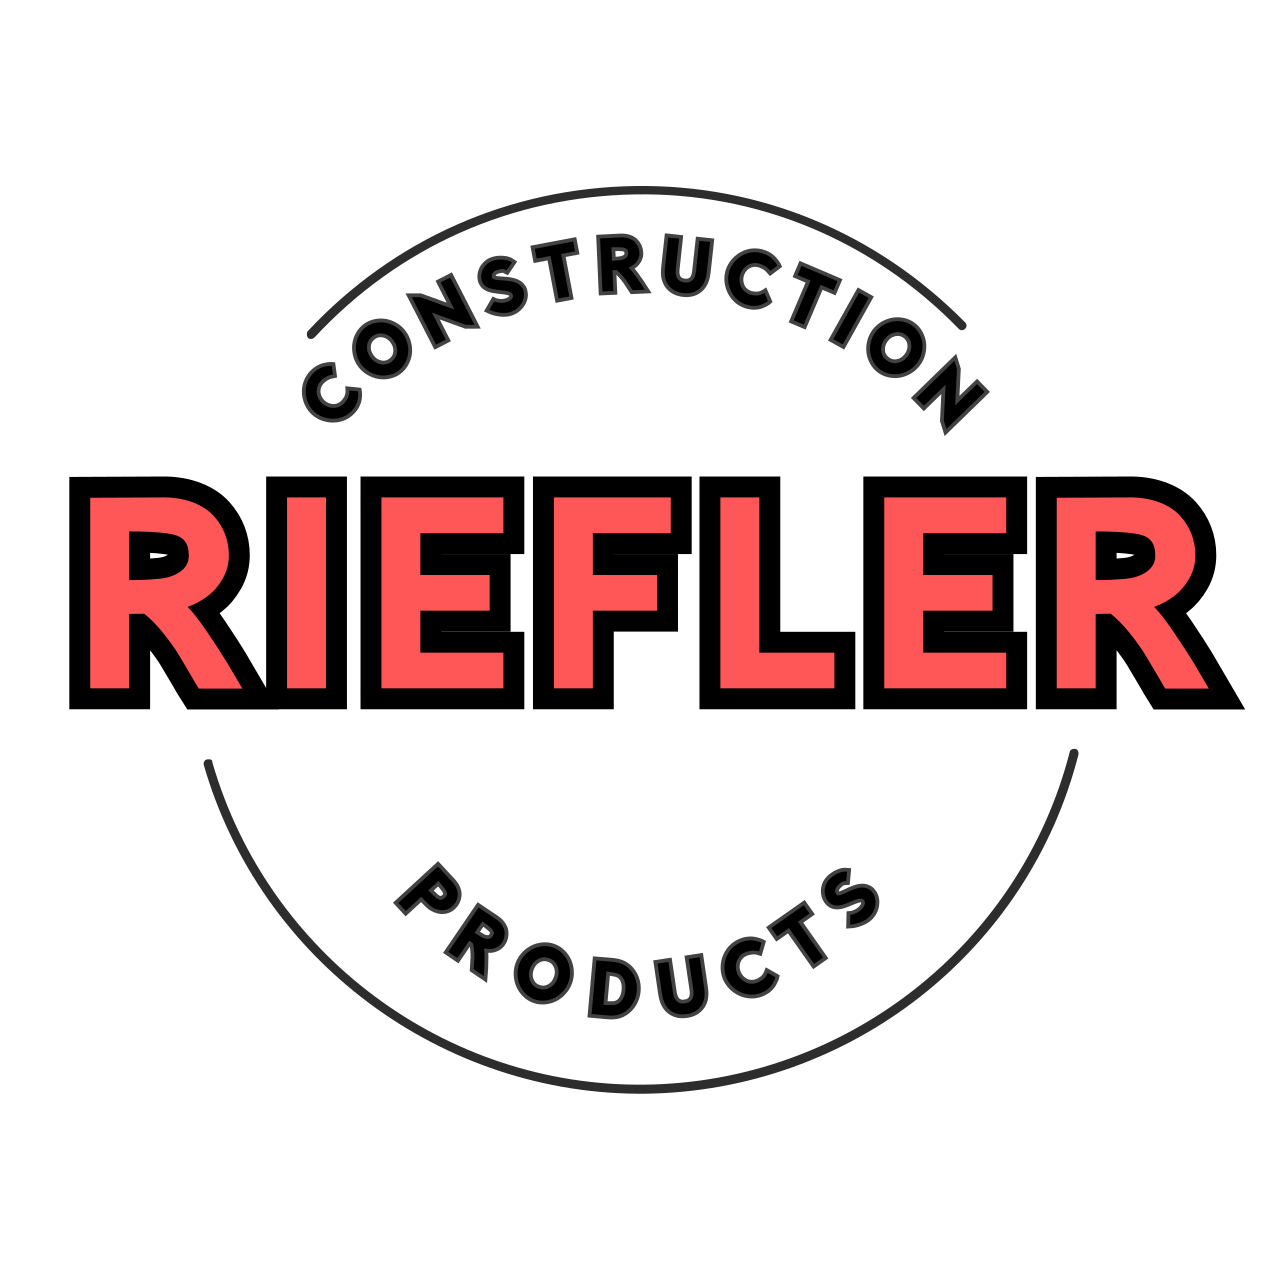 RIEFLER 's logo